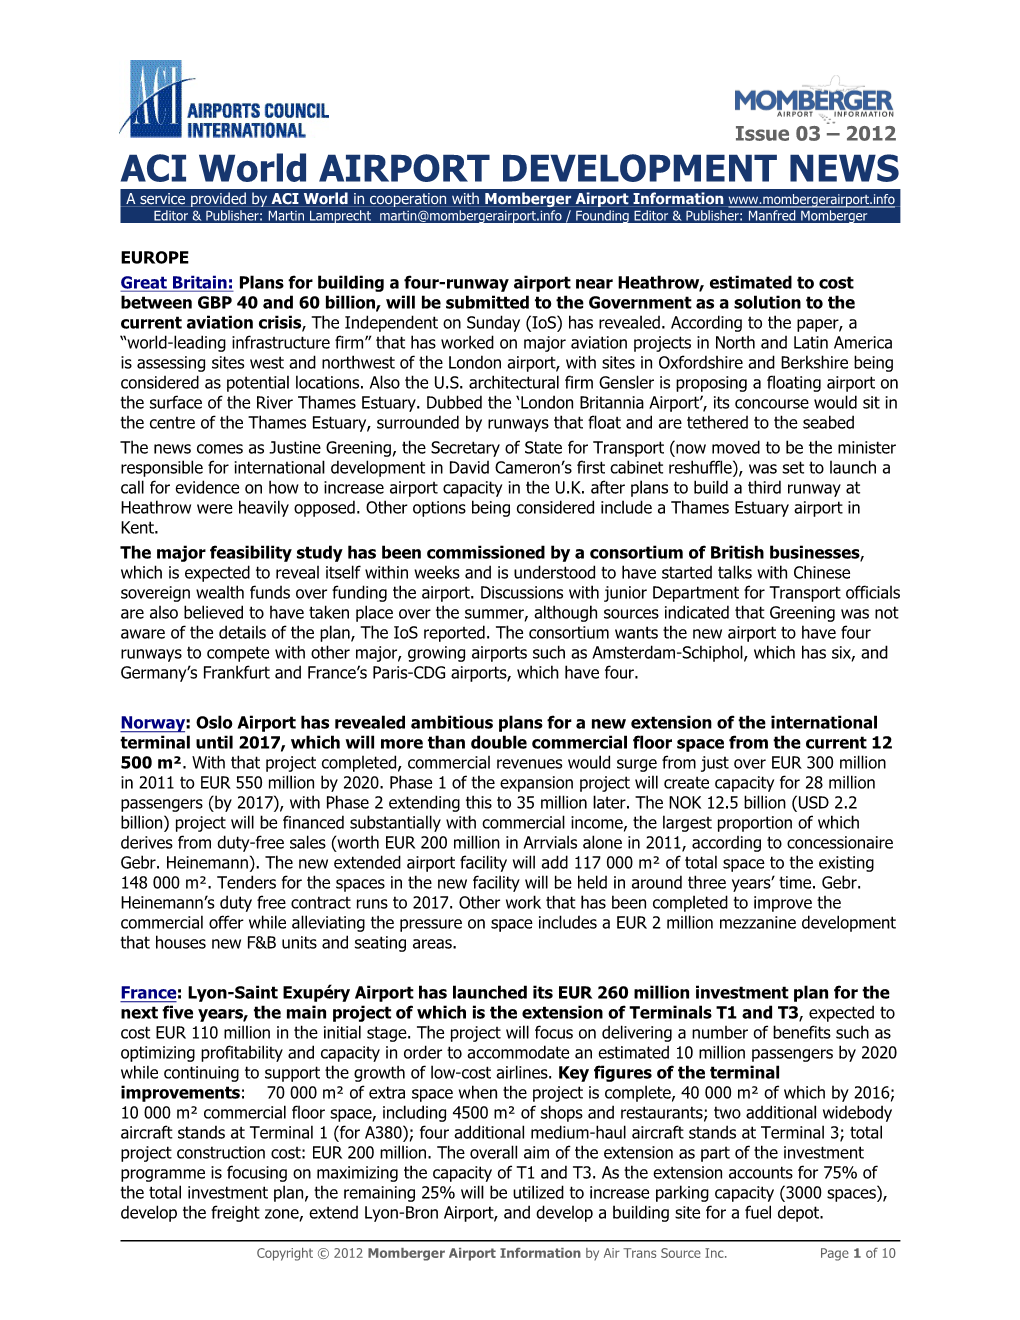 ACI World Airport Development News: Issue 03 – 2012